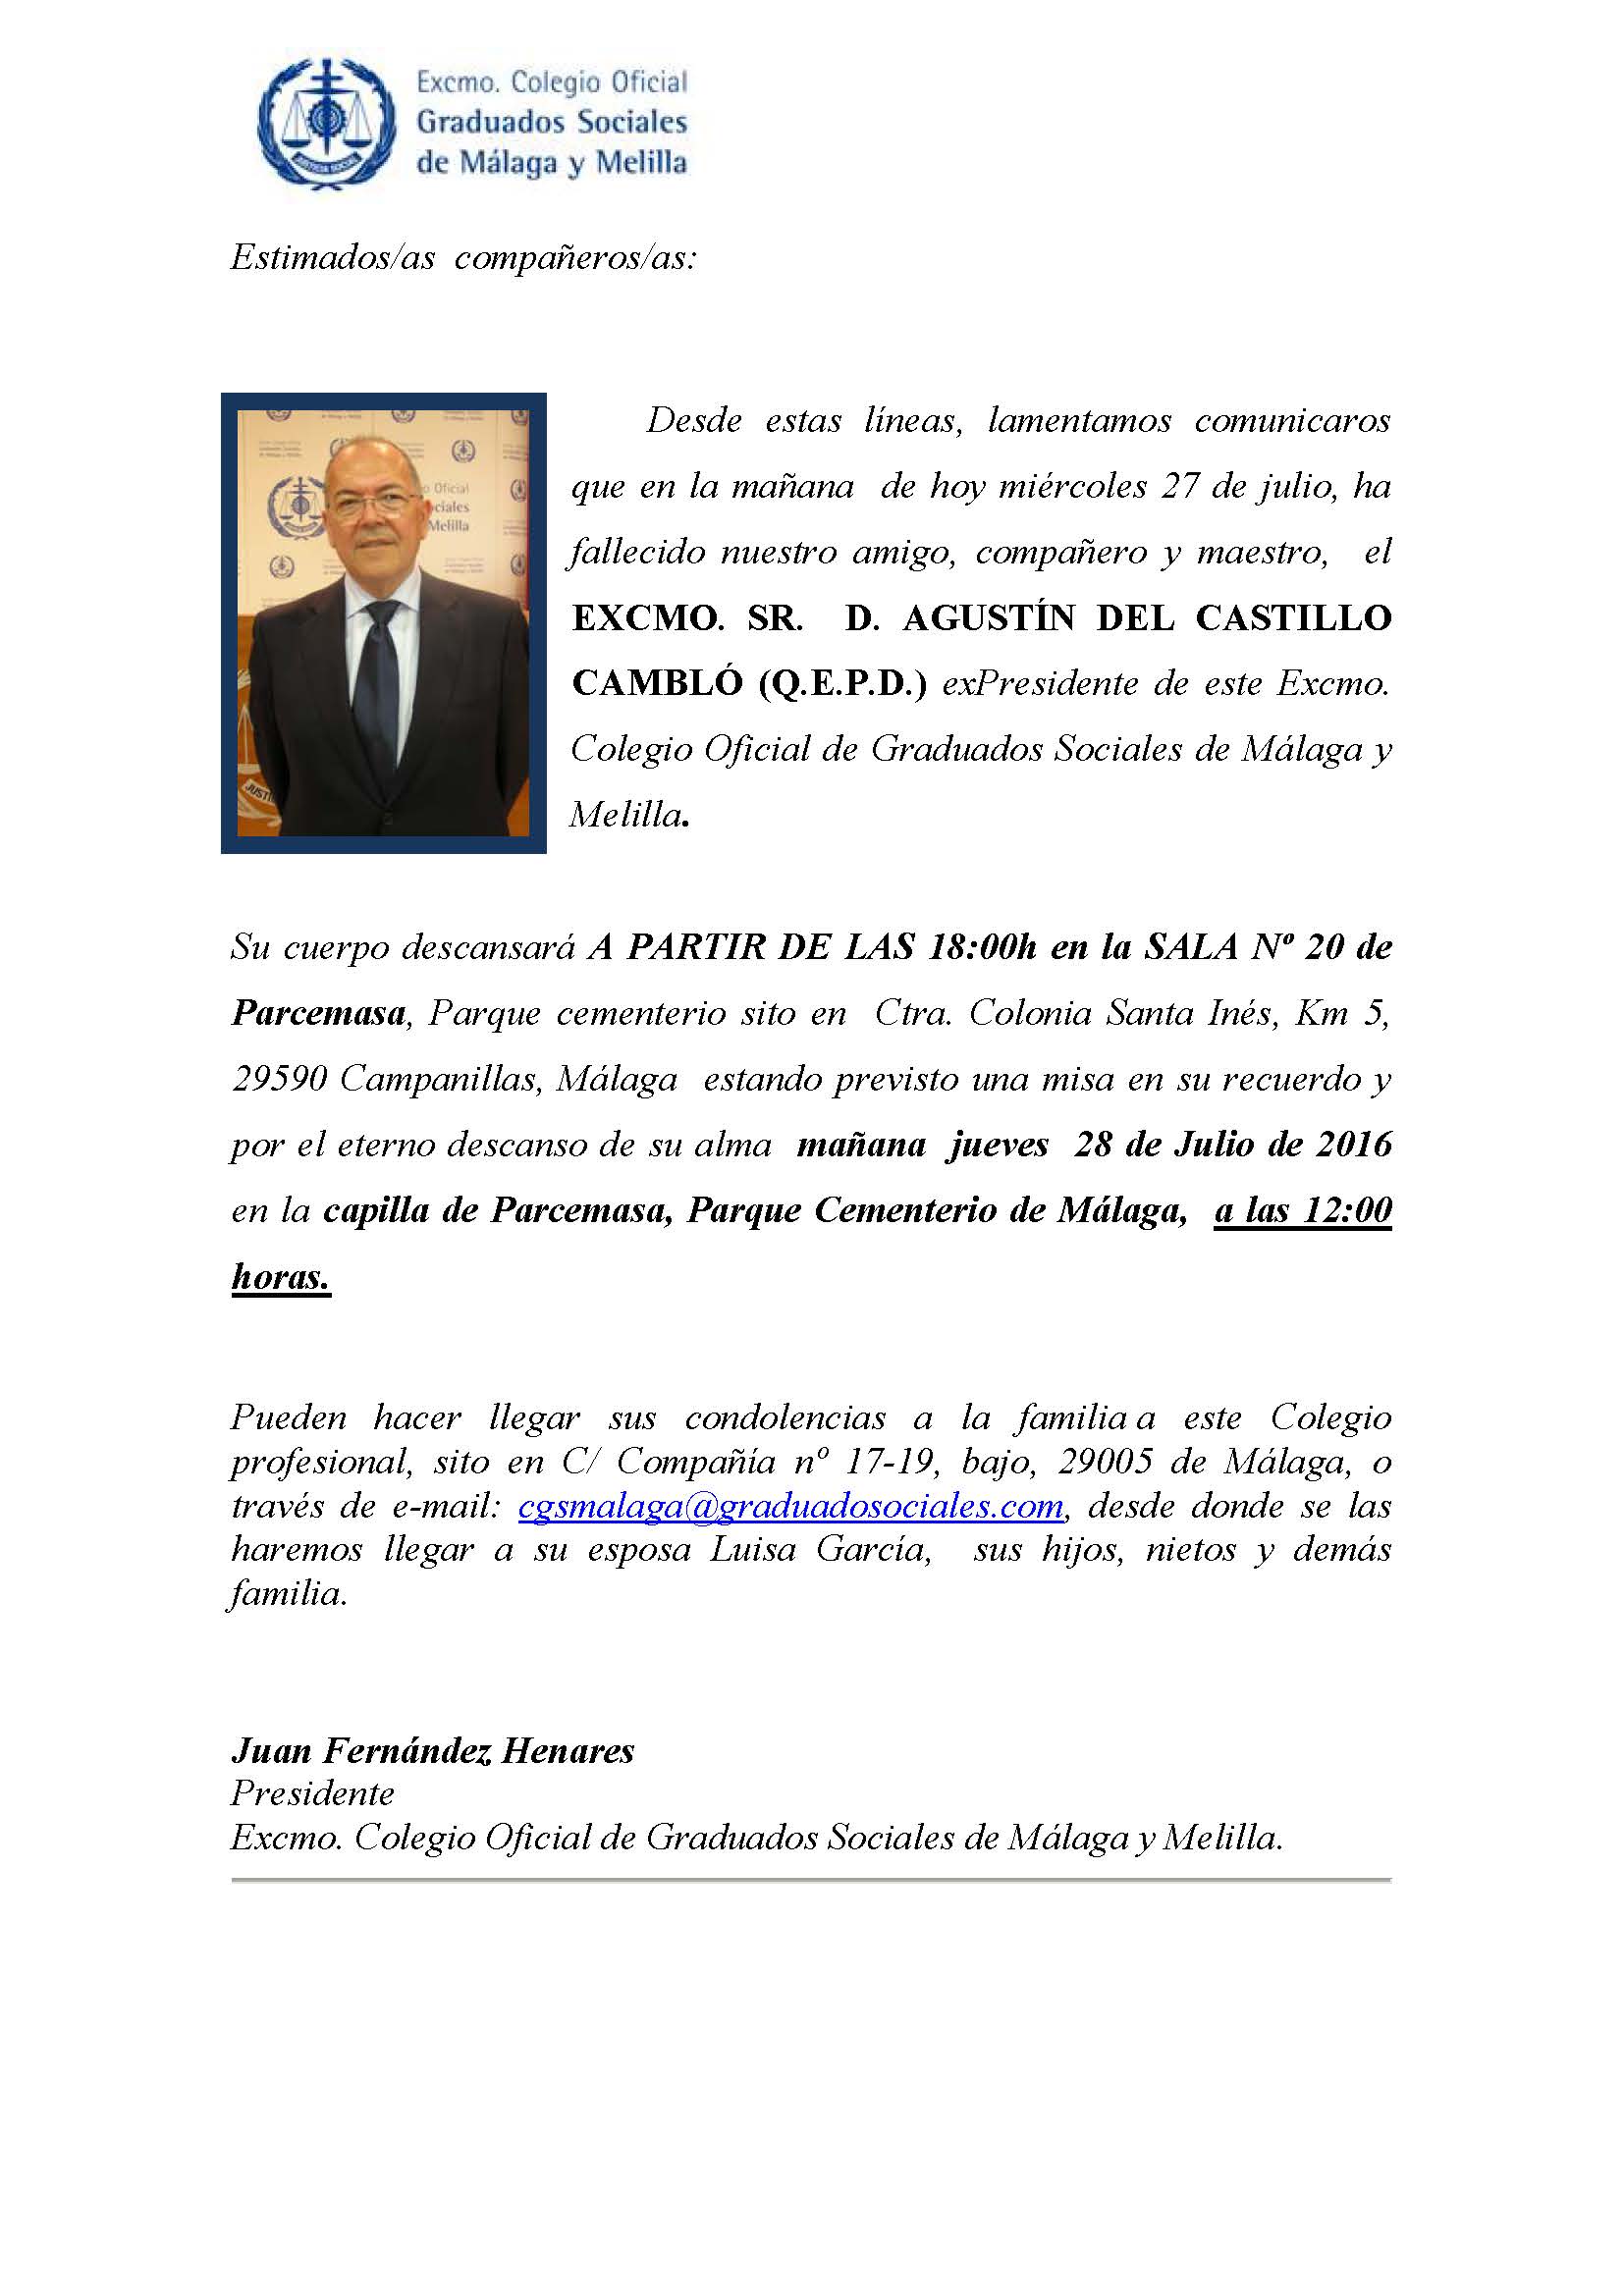 NOTA_INFORMATIVA_FALLECIMIENTO_AGUSTIN_DEL_CASTILLO_CAMBLO